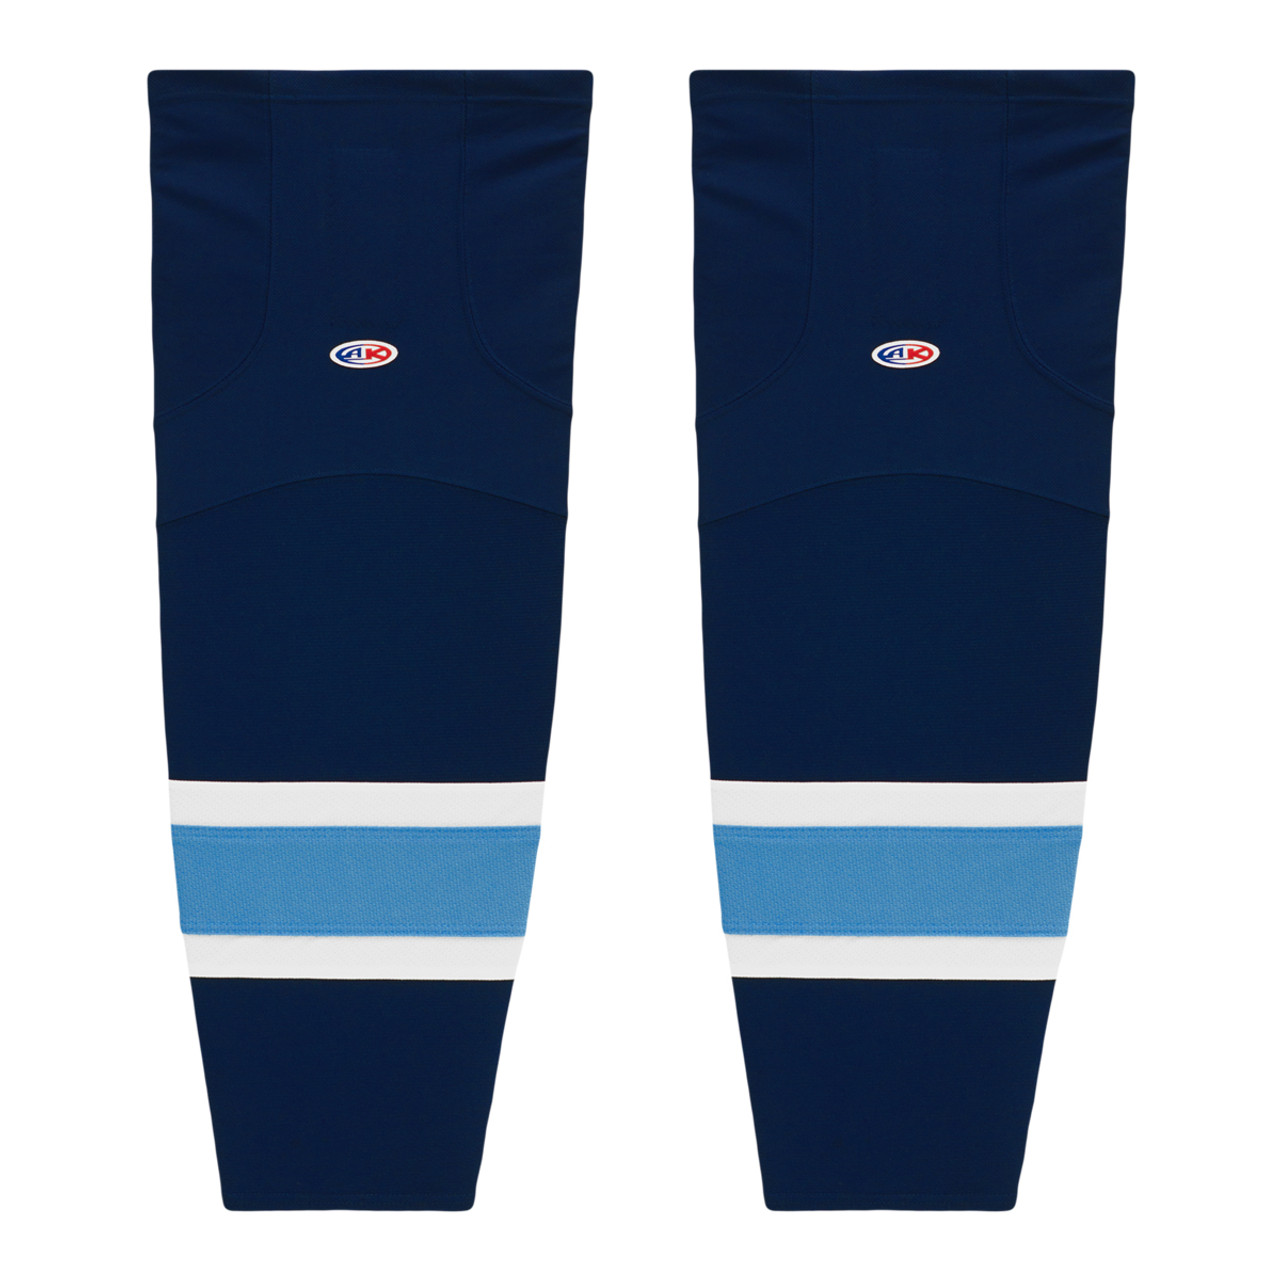 Tot Onafhankelijk lunch Athletic Knit HS2100 Pro Hockey Socks - More Team Colors -  everysportforless.com